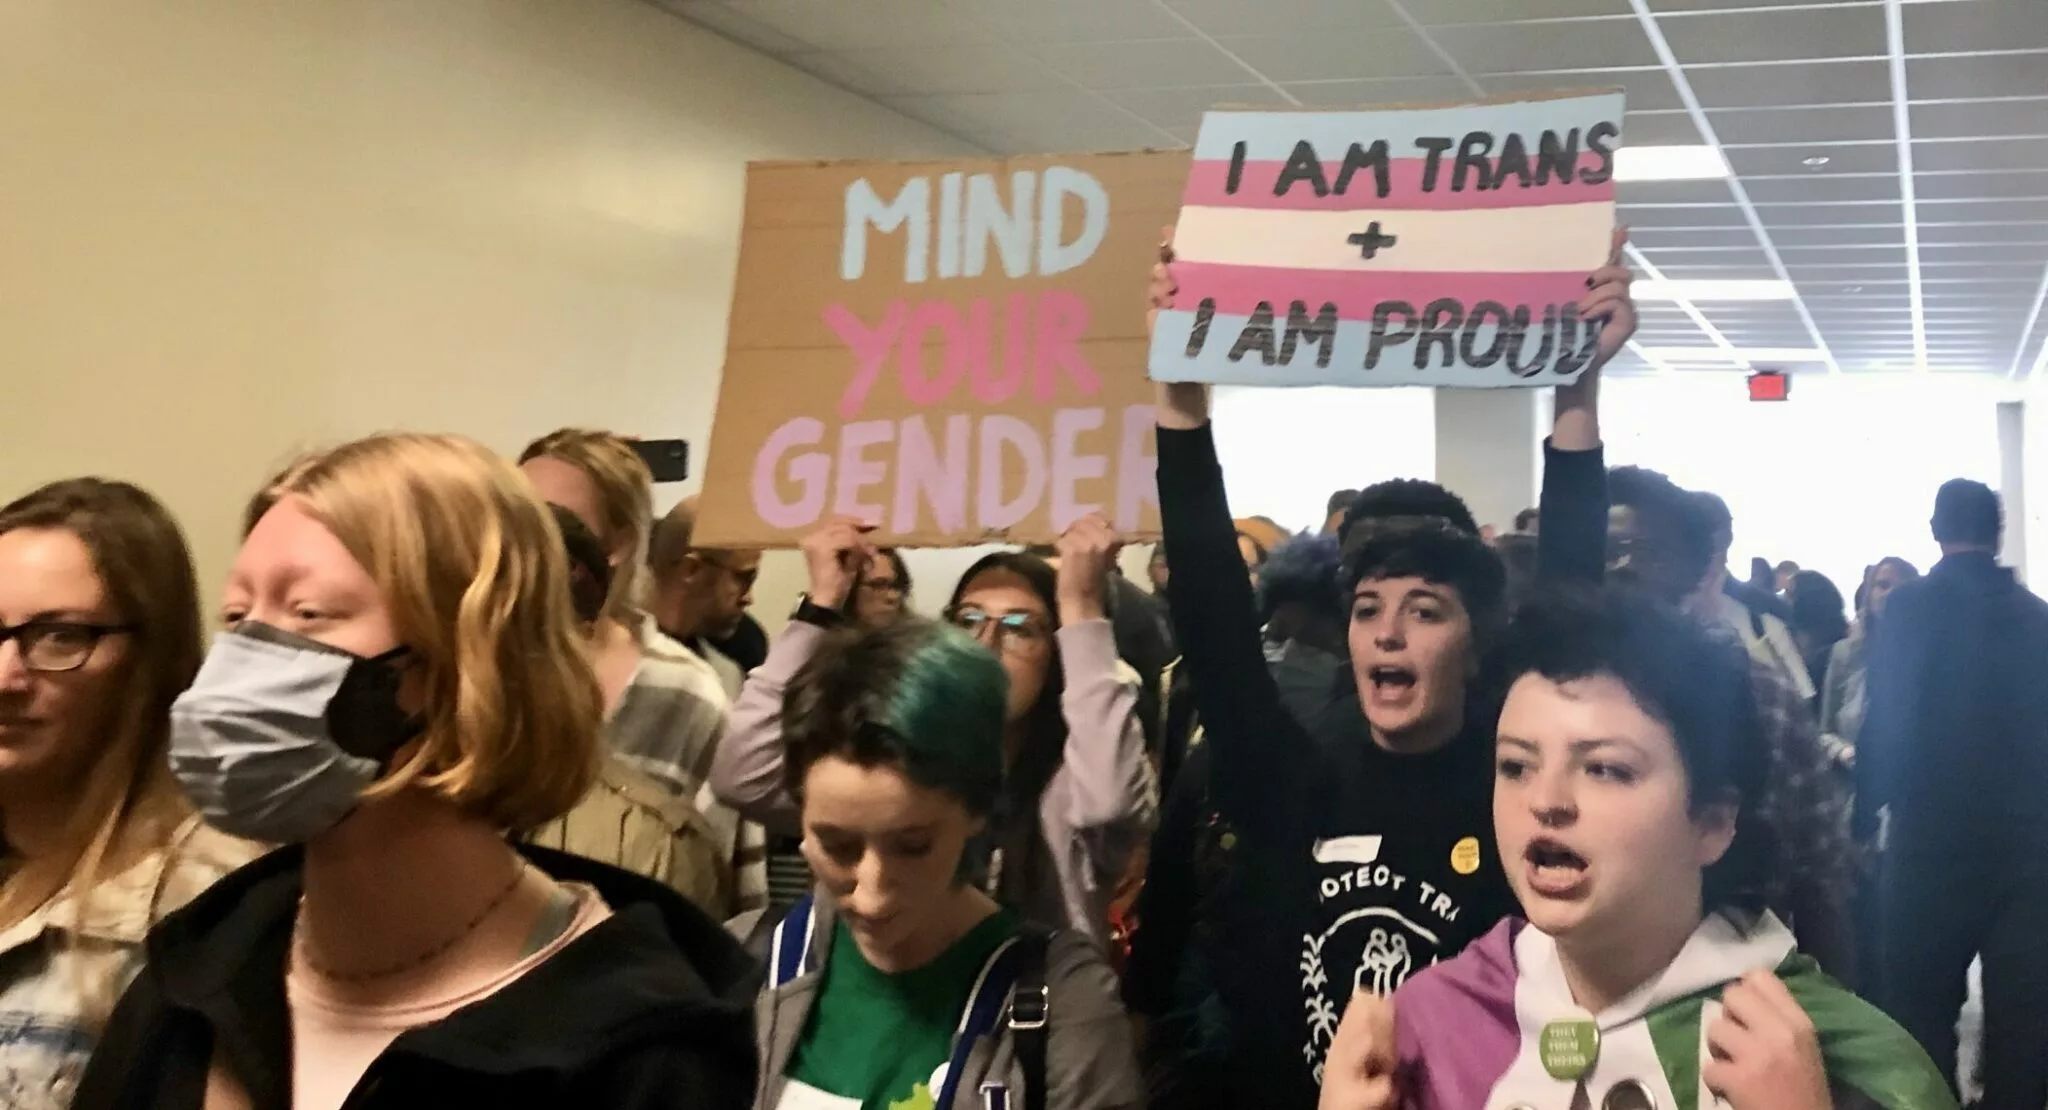 Young transgender activists in Lexington